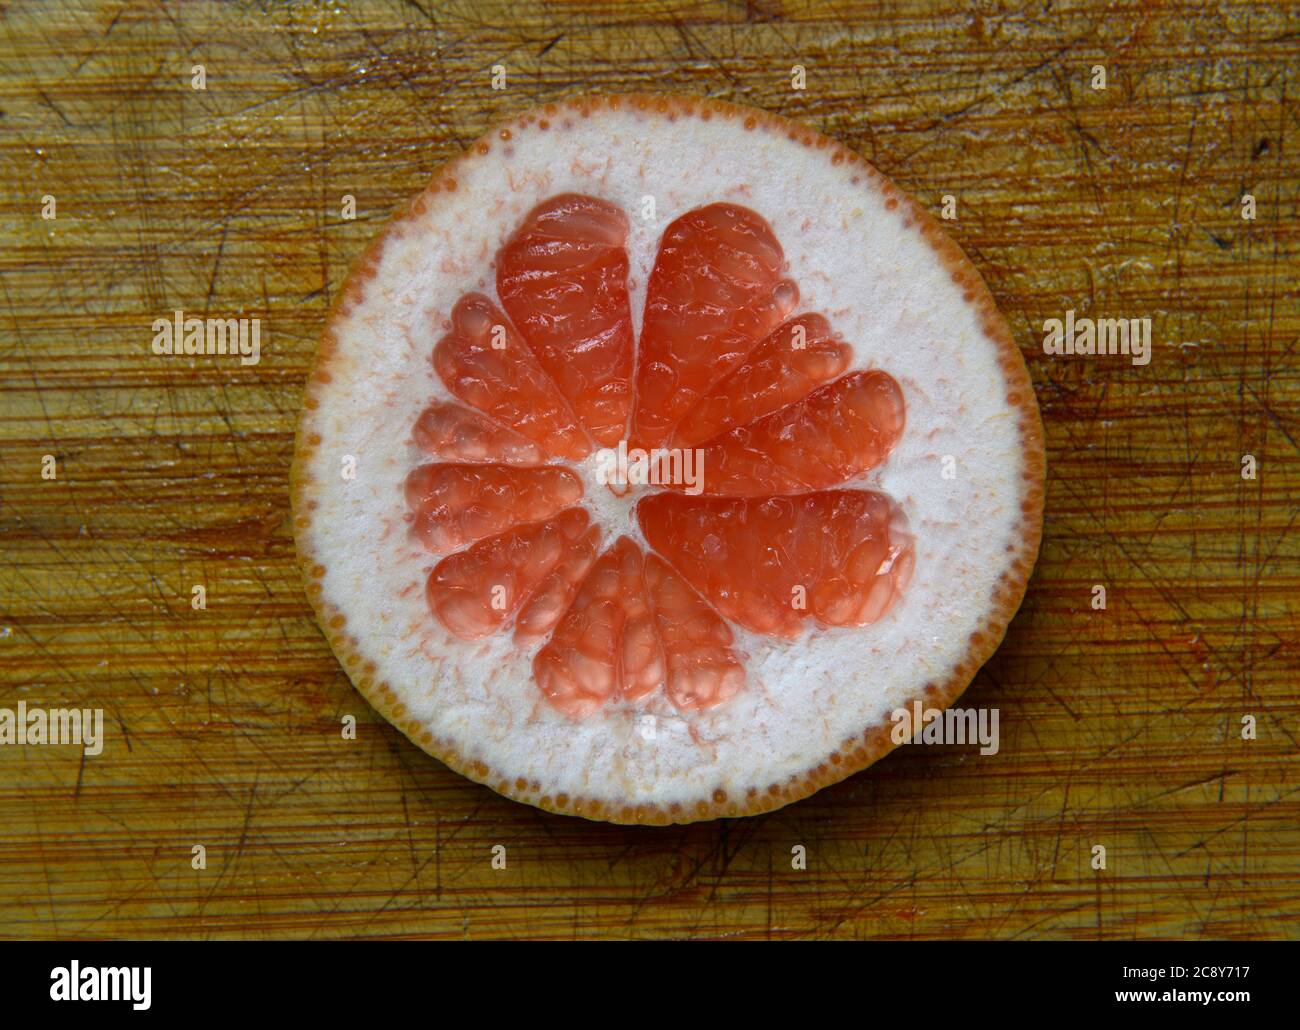 Grapefruit cross section. Stock Photo